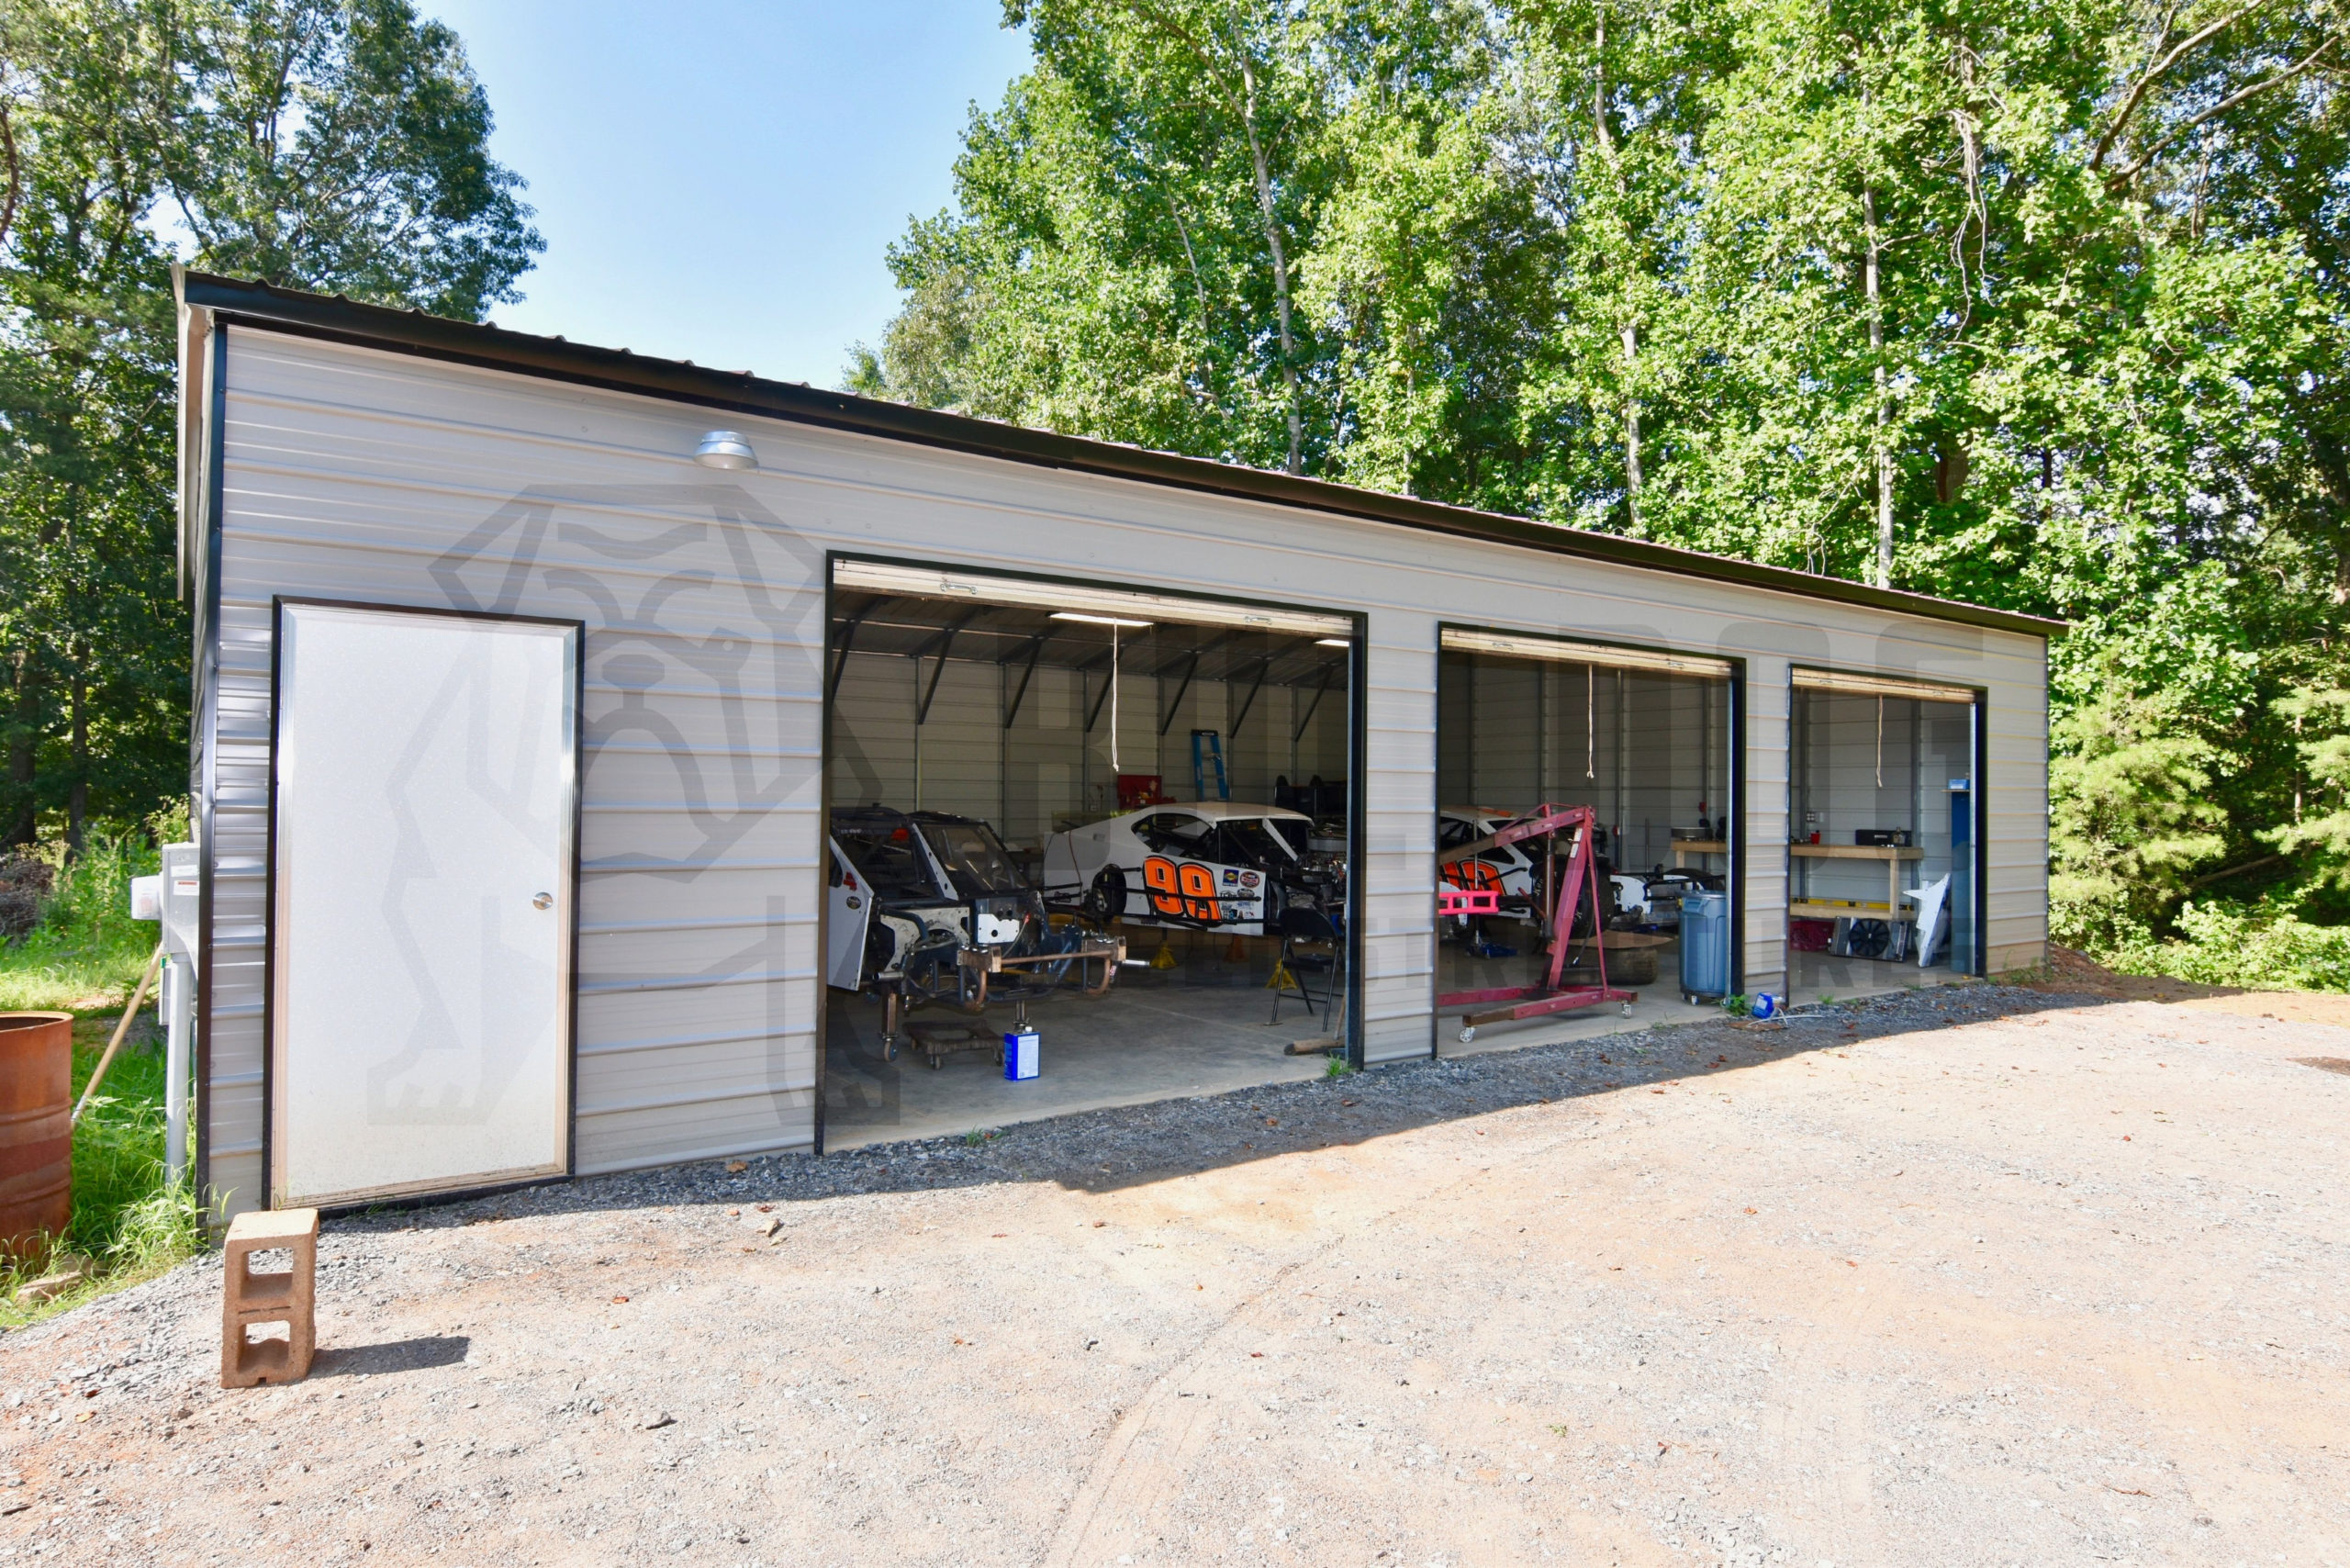 Three-car garage with gray walls